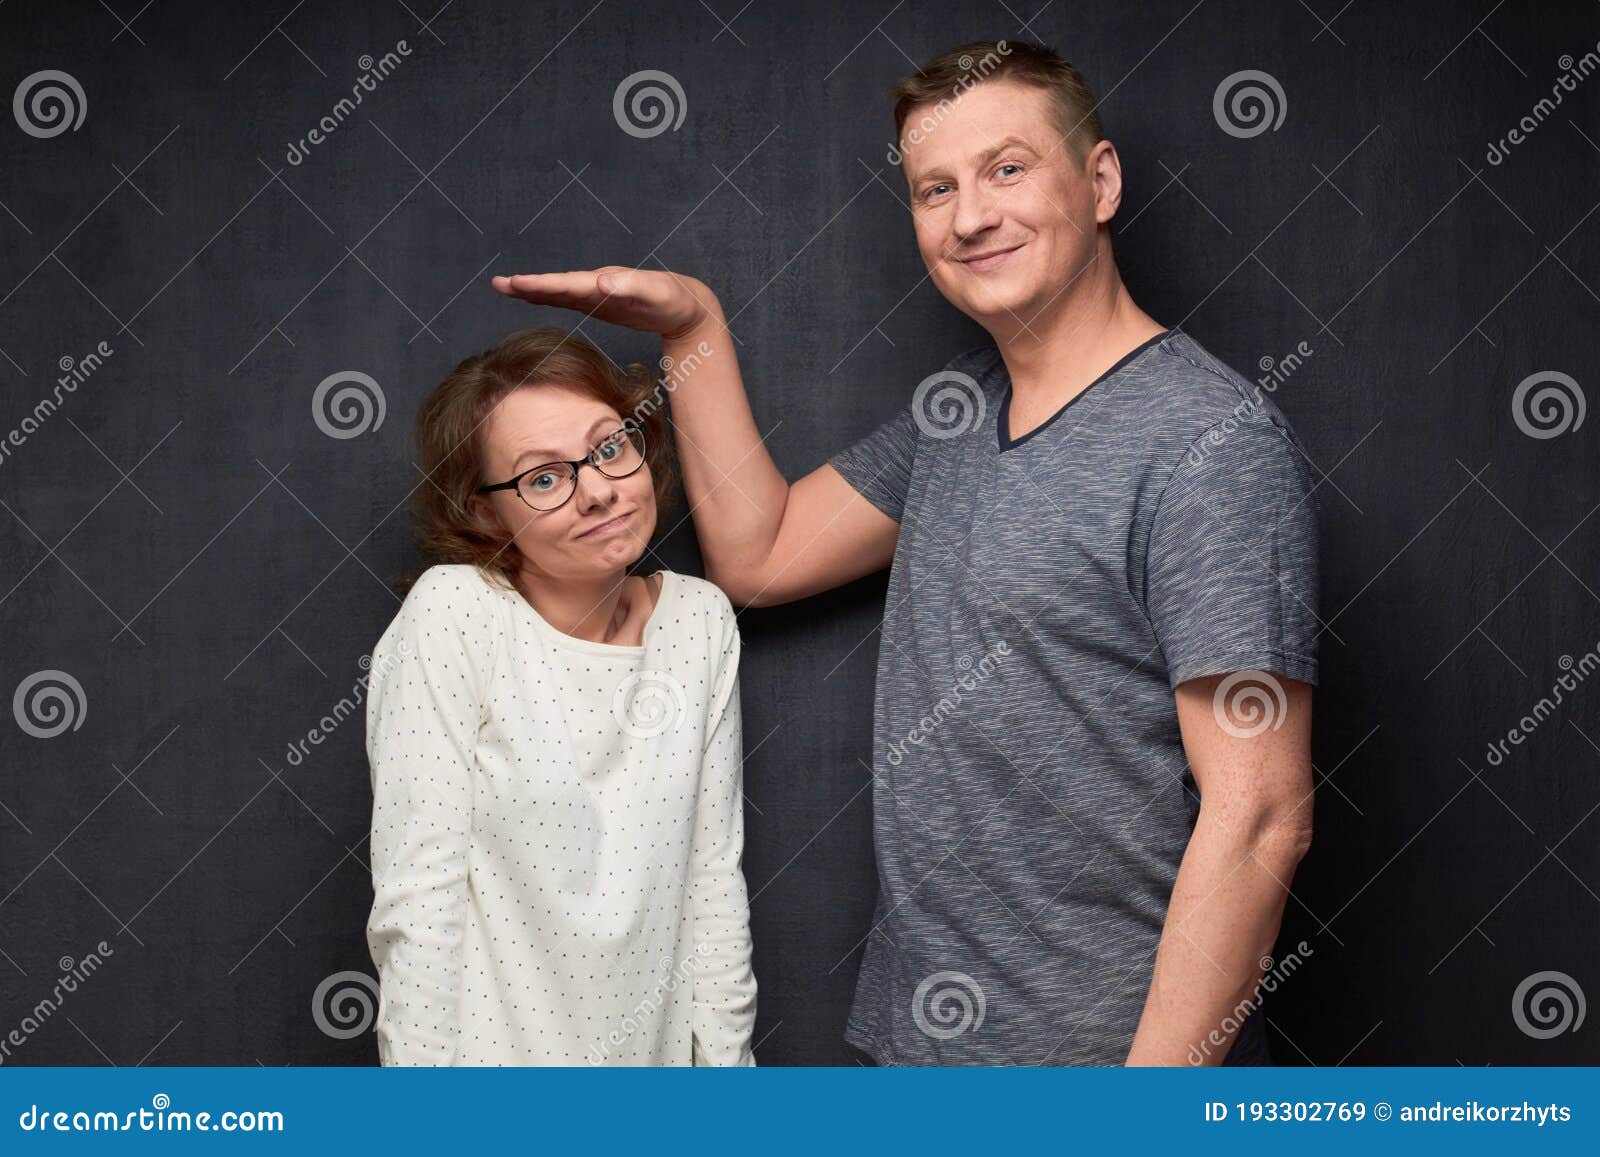 shot of funny tall man and short woman